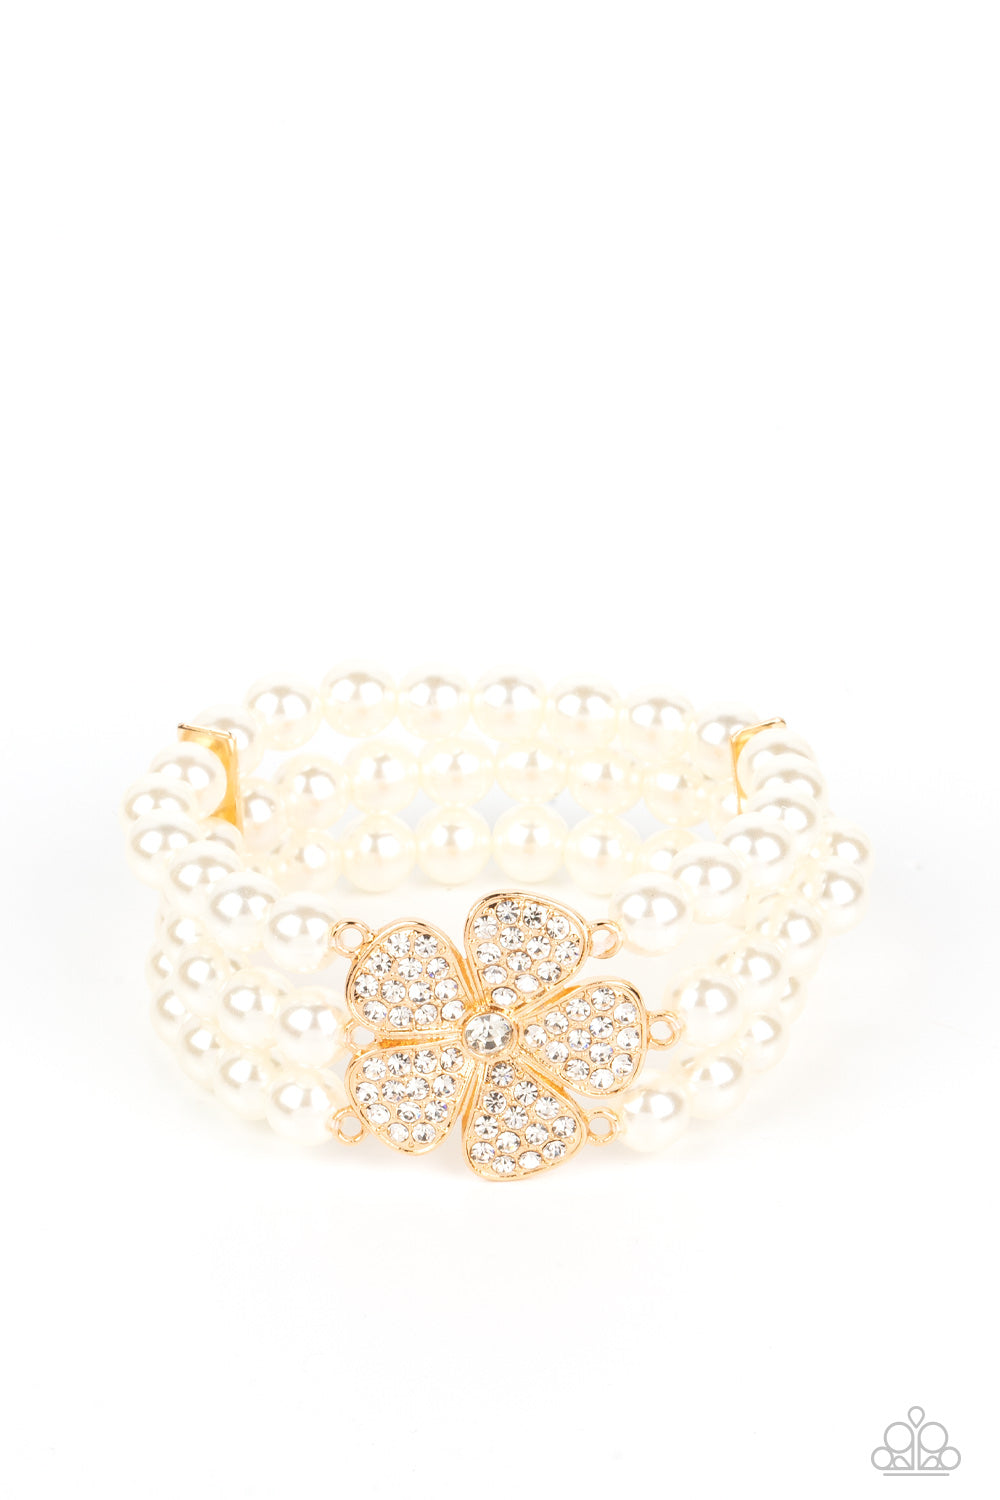 Park Avenue Orchard - Gold & White Pearl Bracelet - Princess Glam Shop